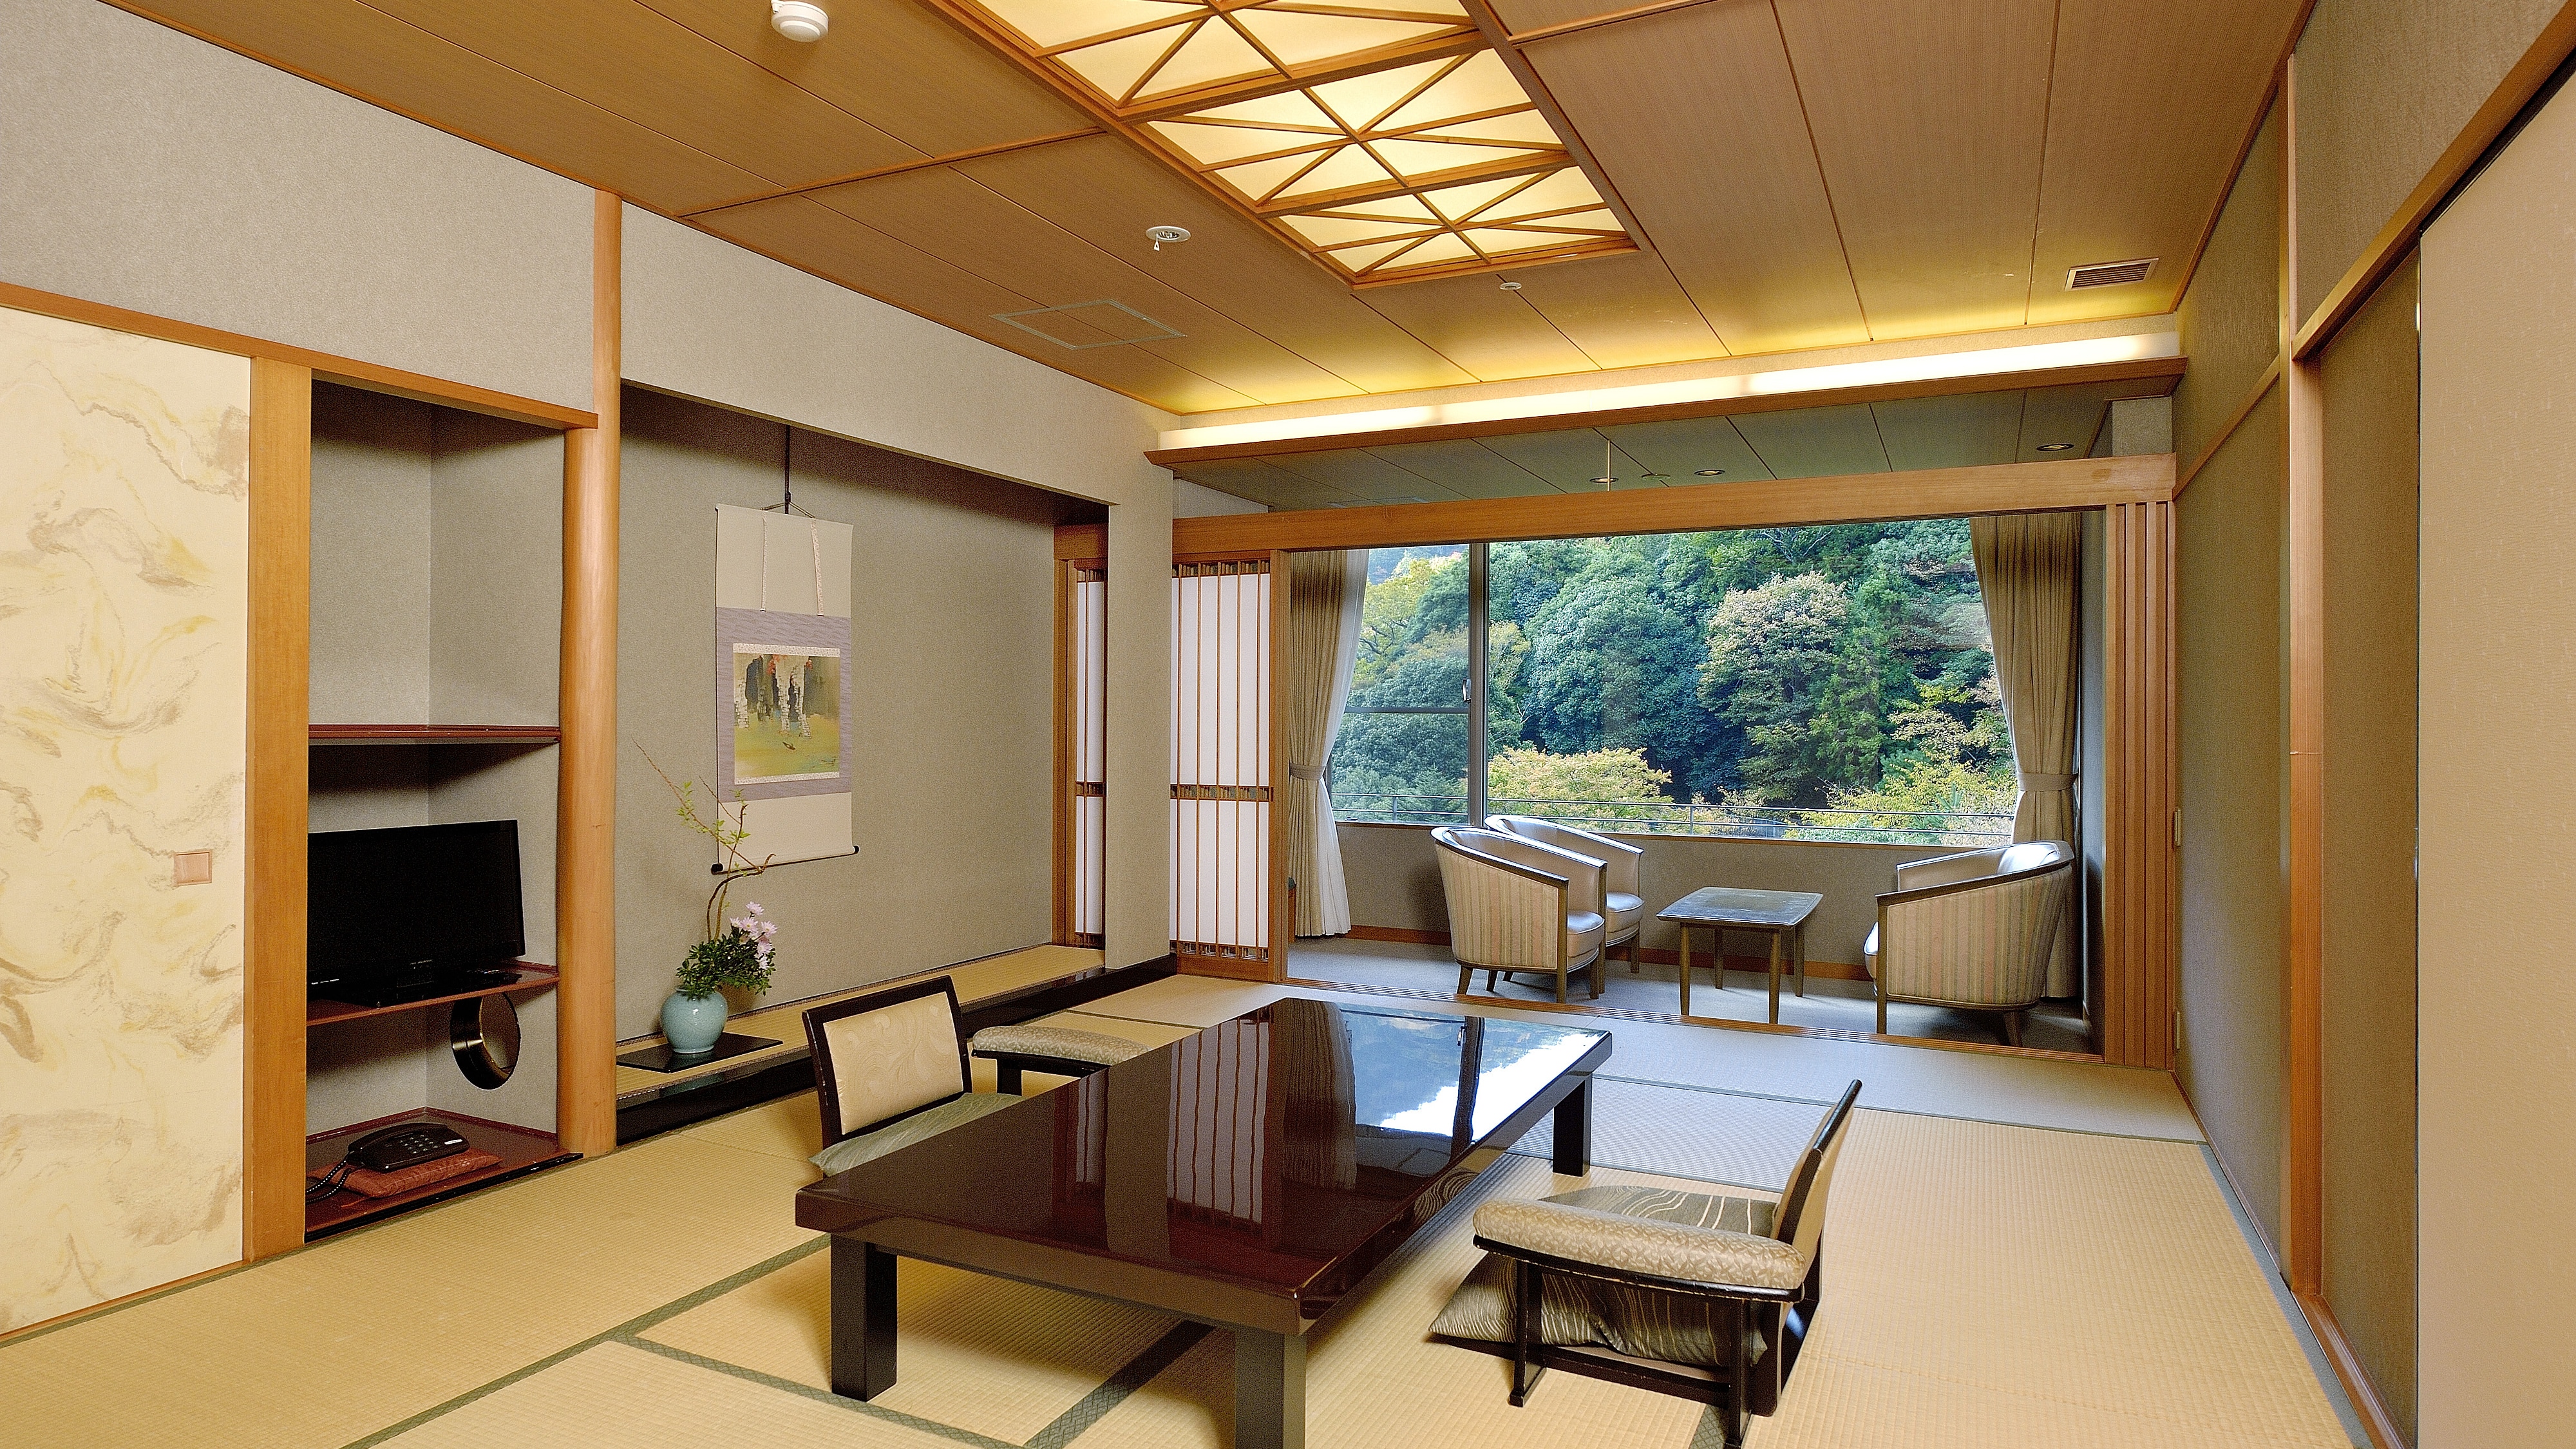 Korokan Standard Japanese-style room ◆ 12 tatami mats + wide rim (7㎡): Capacity 2-5 people